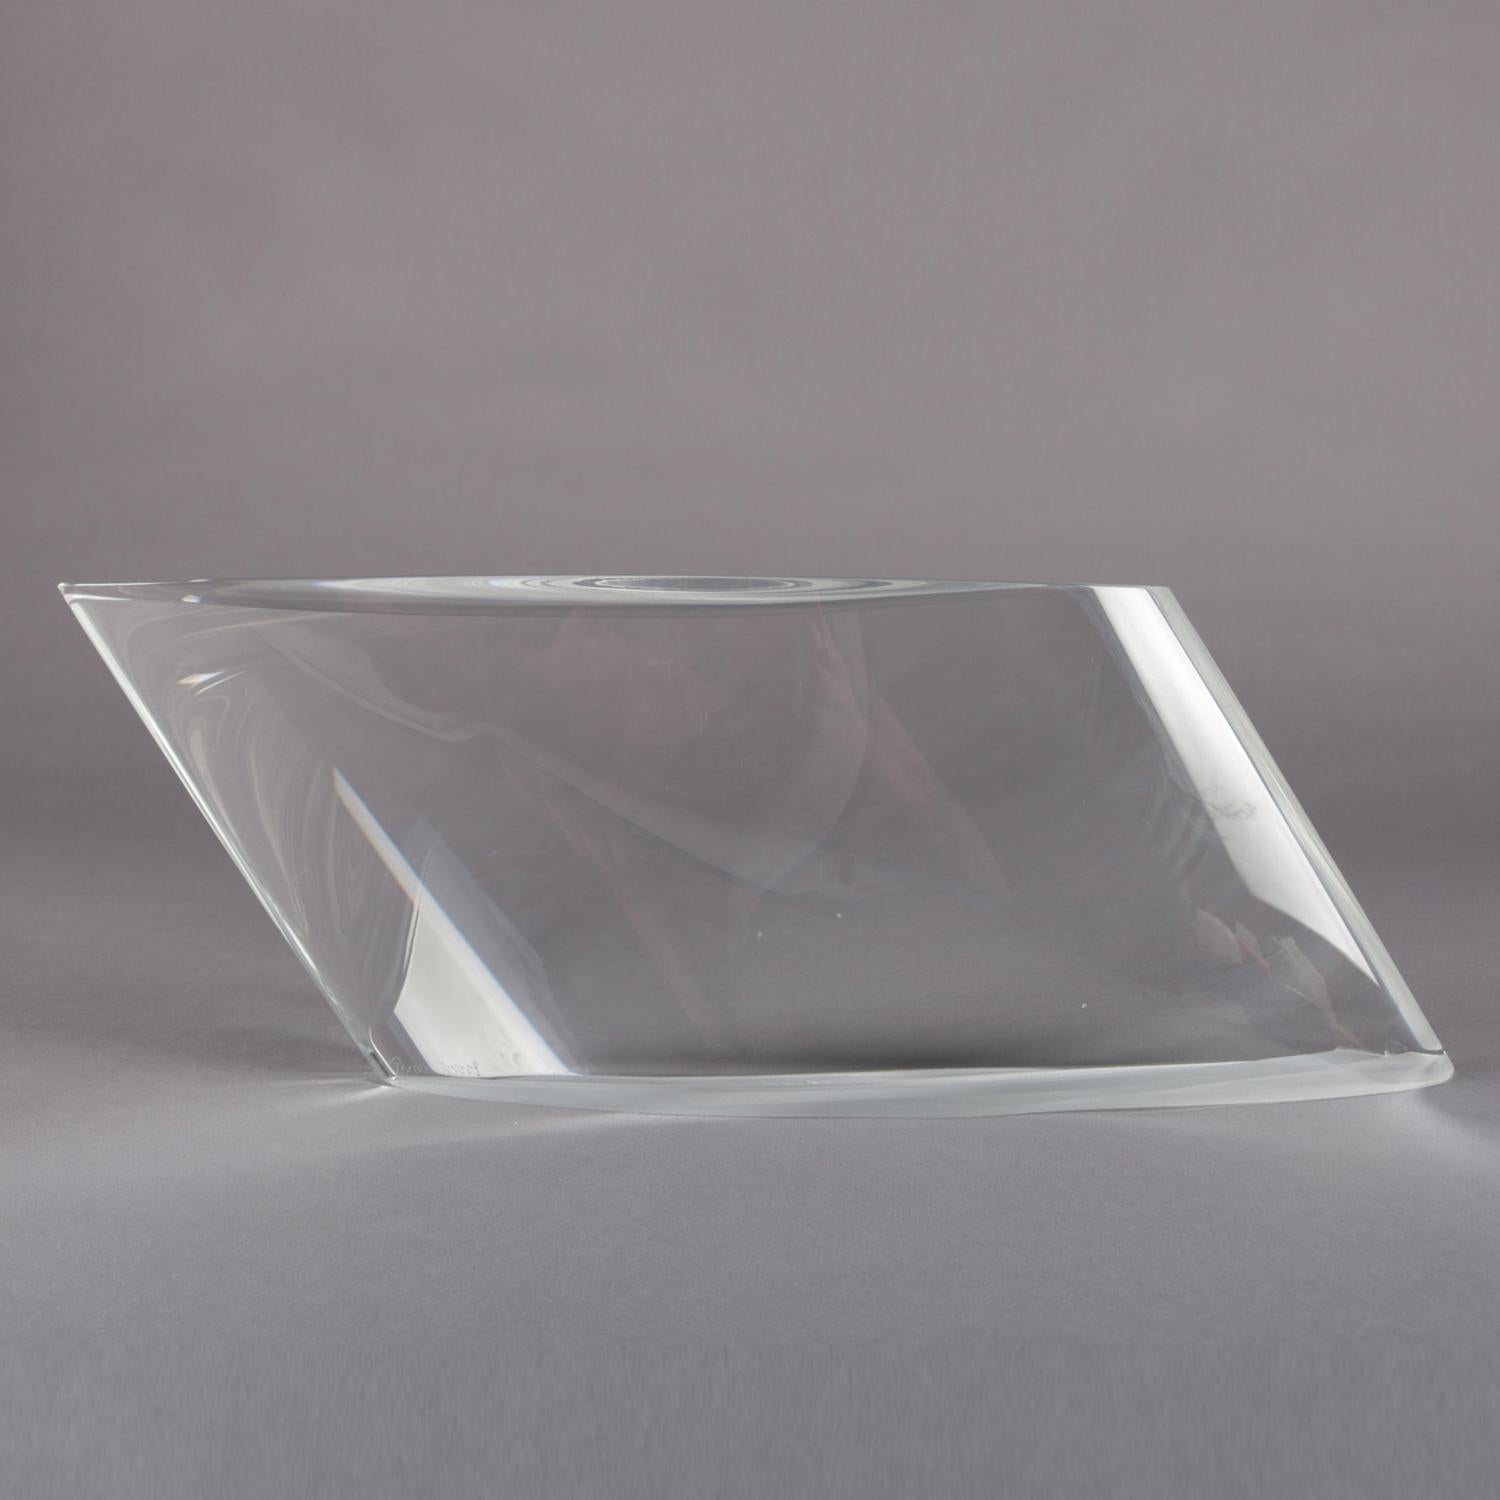 Cast Thomas Brzon Contemporary Cut-Glass Optic Glass Abstract Sculpture, circa 2016